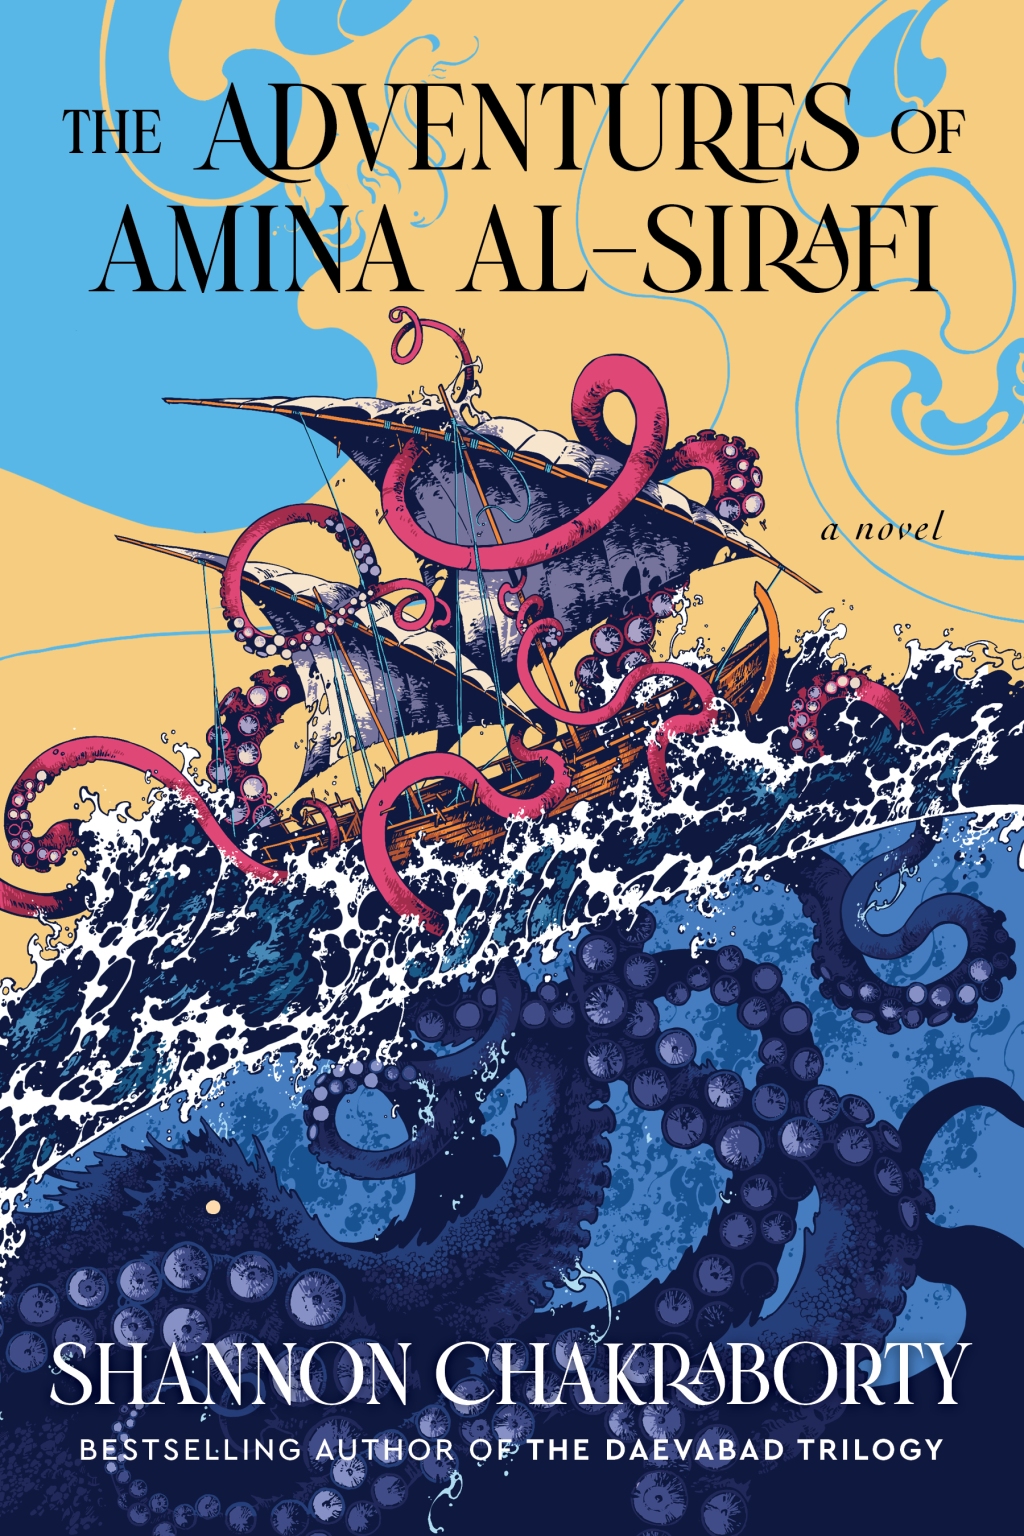 Book Review: The Adventures of Amina al-Sirafi by Shannon Chakraborty (fantasy)